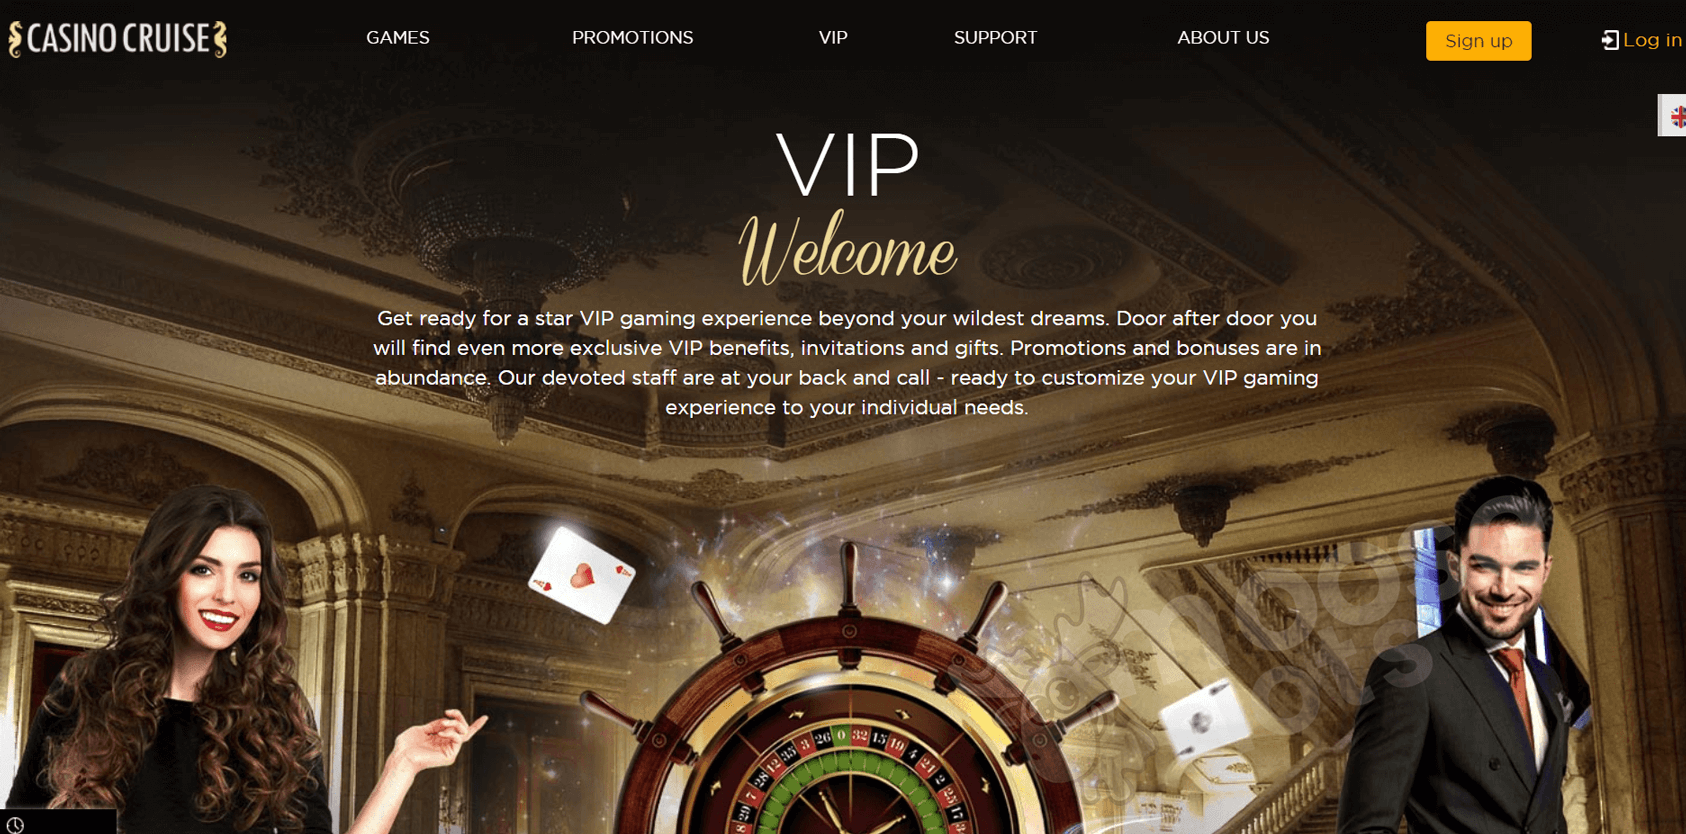 Casino Cruise vip loyalty program